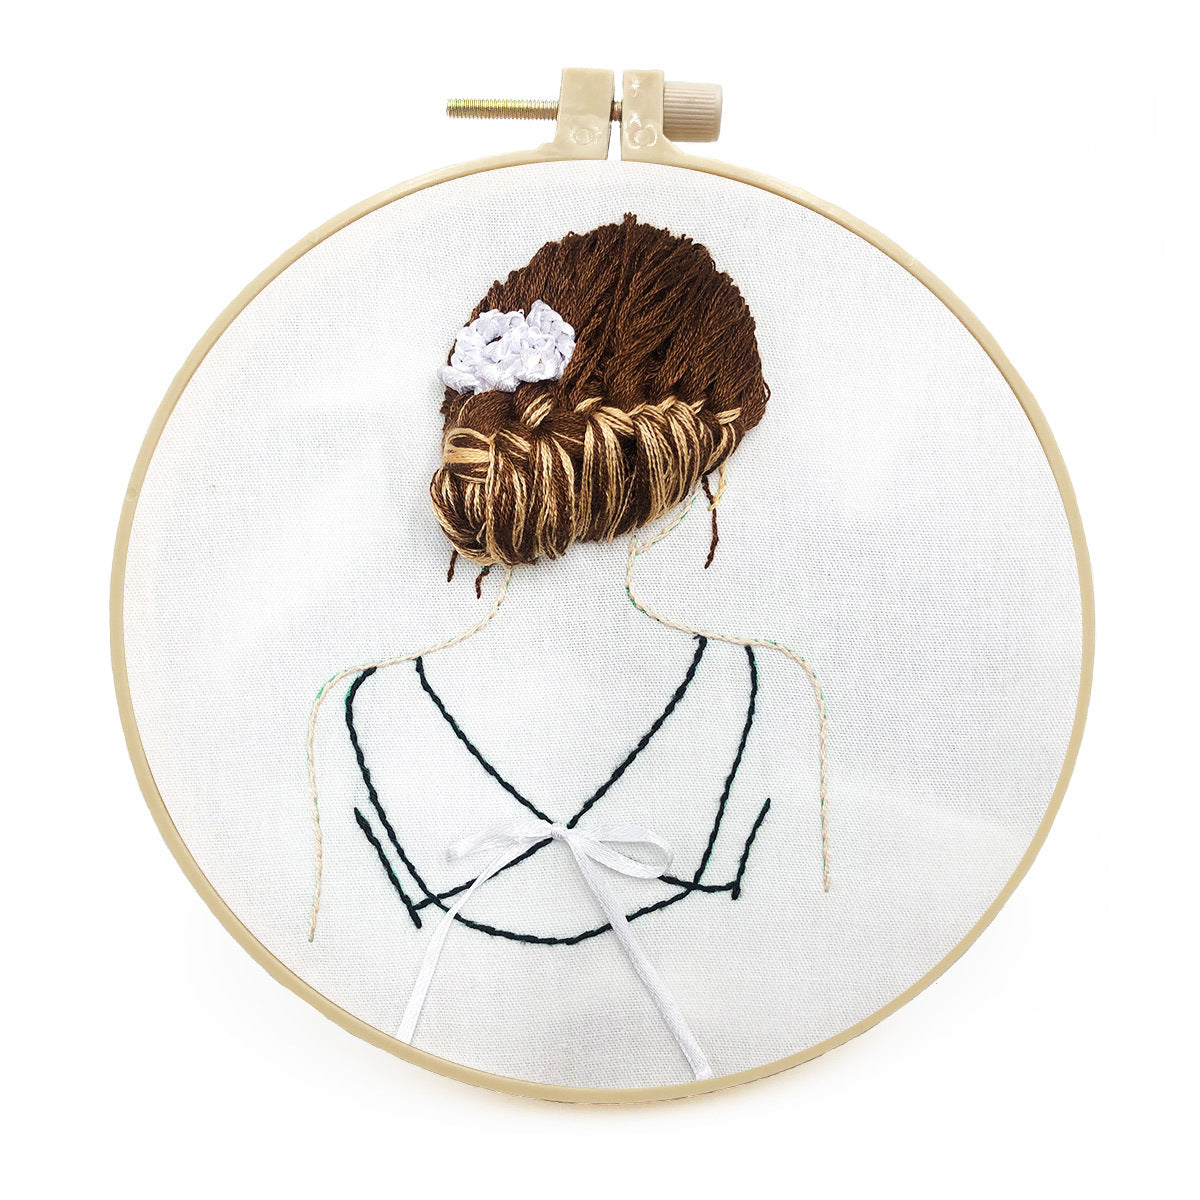 Fashion Women Embroidery Kits - 1Pcs